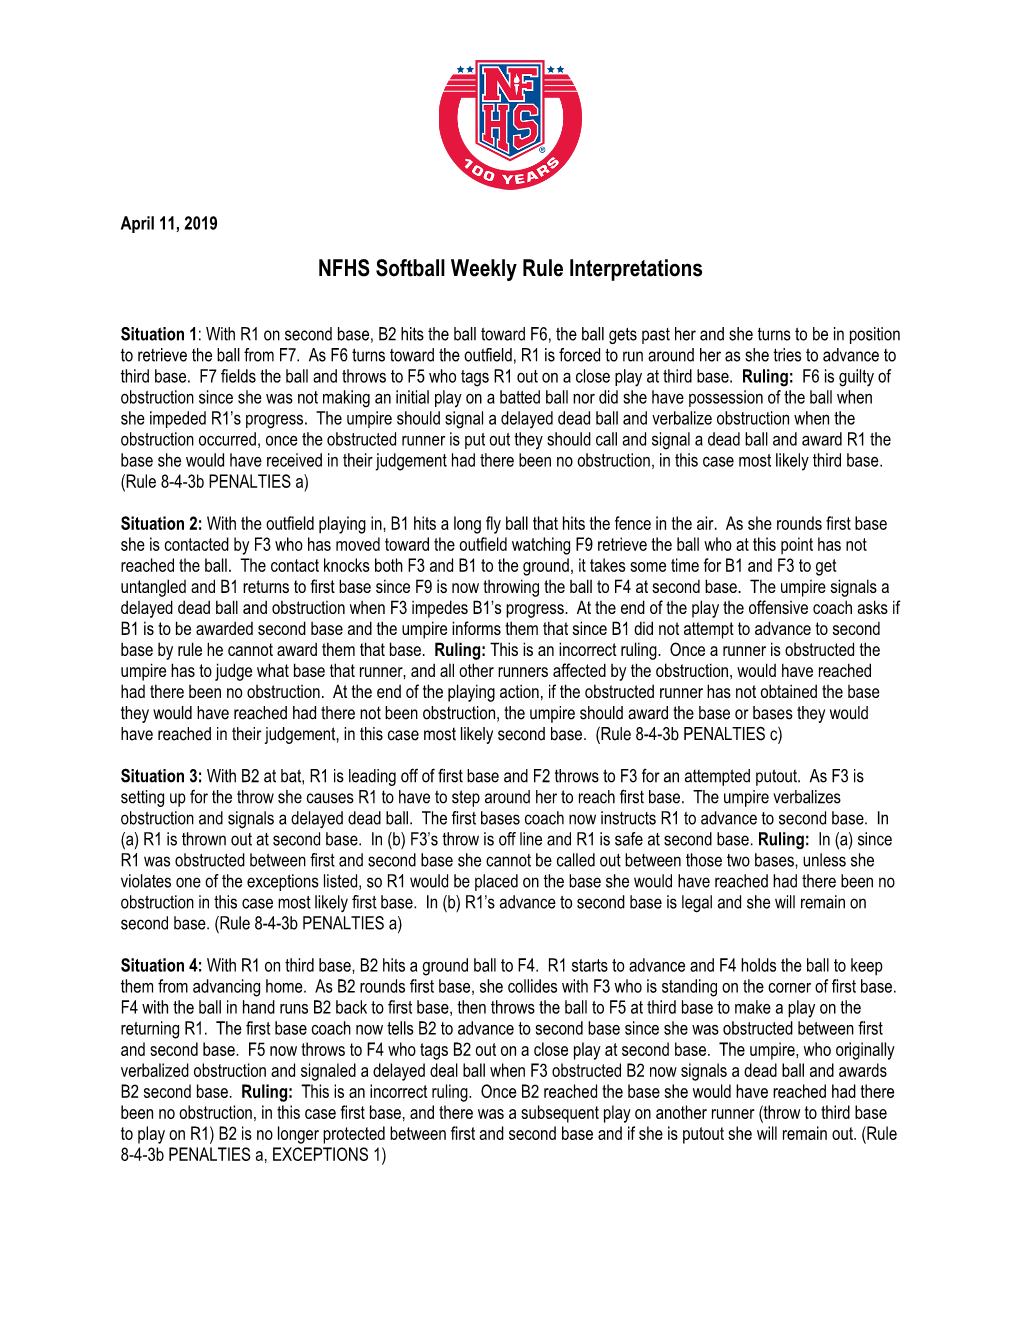 NFHS Softball Weekly Rule Interpretations